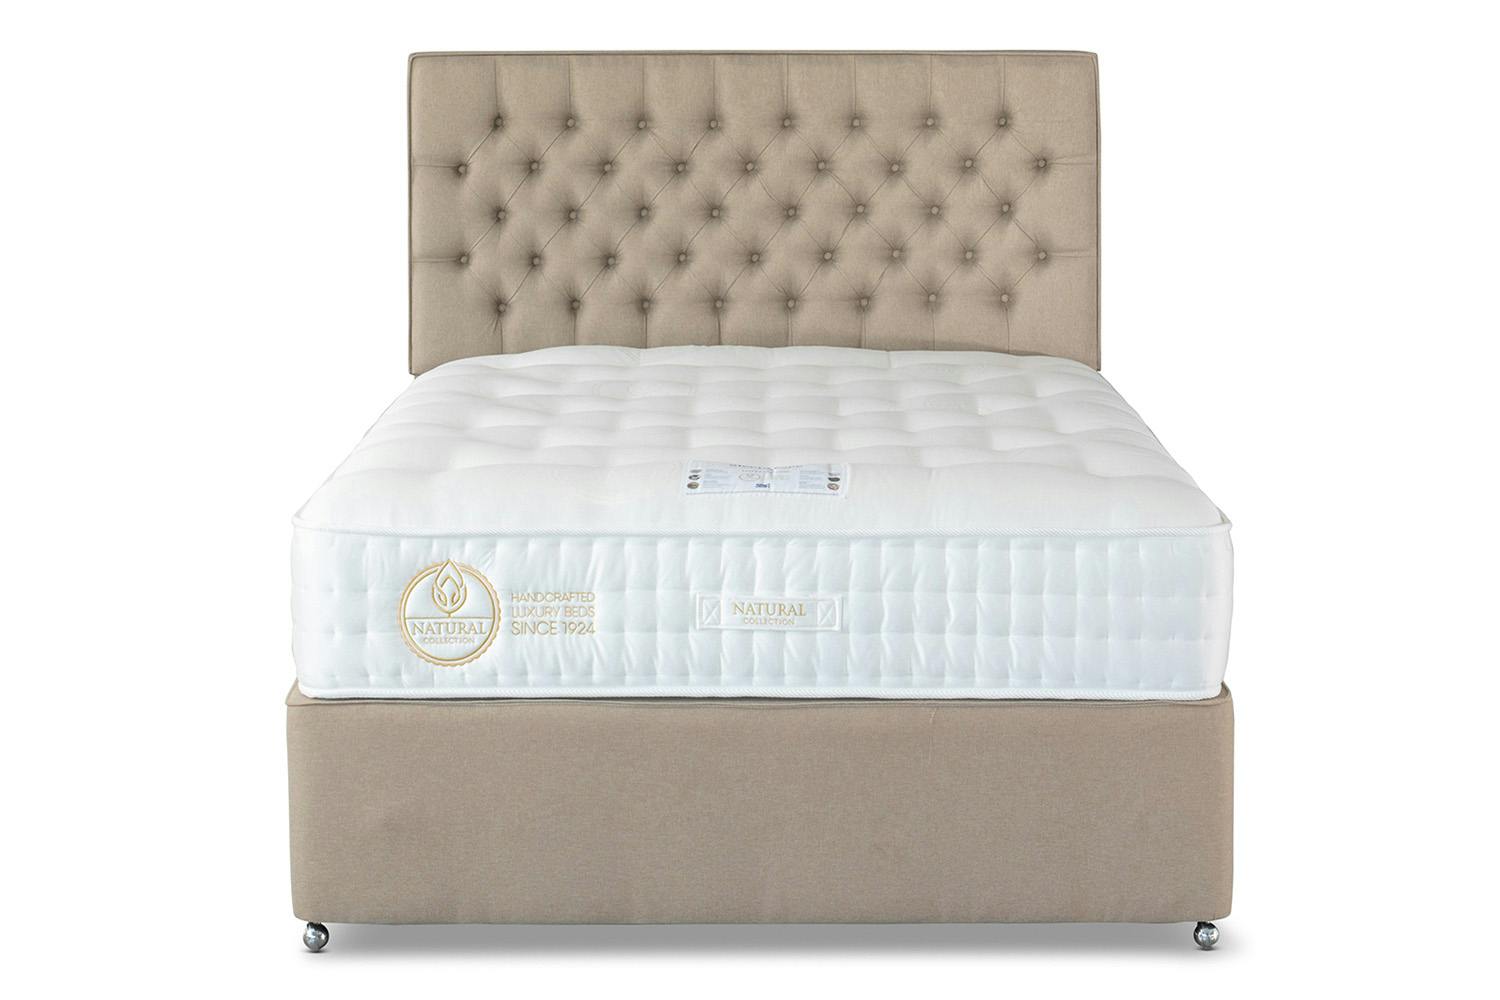 imperial mattress full size